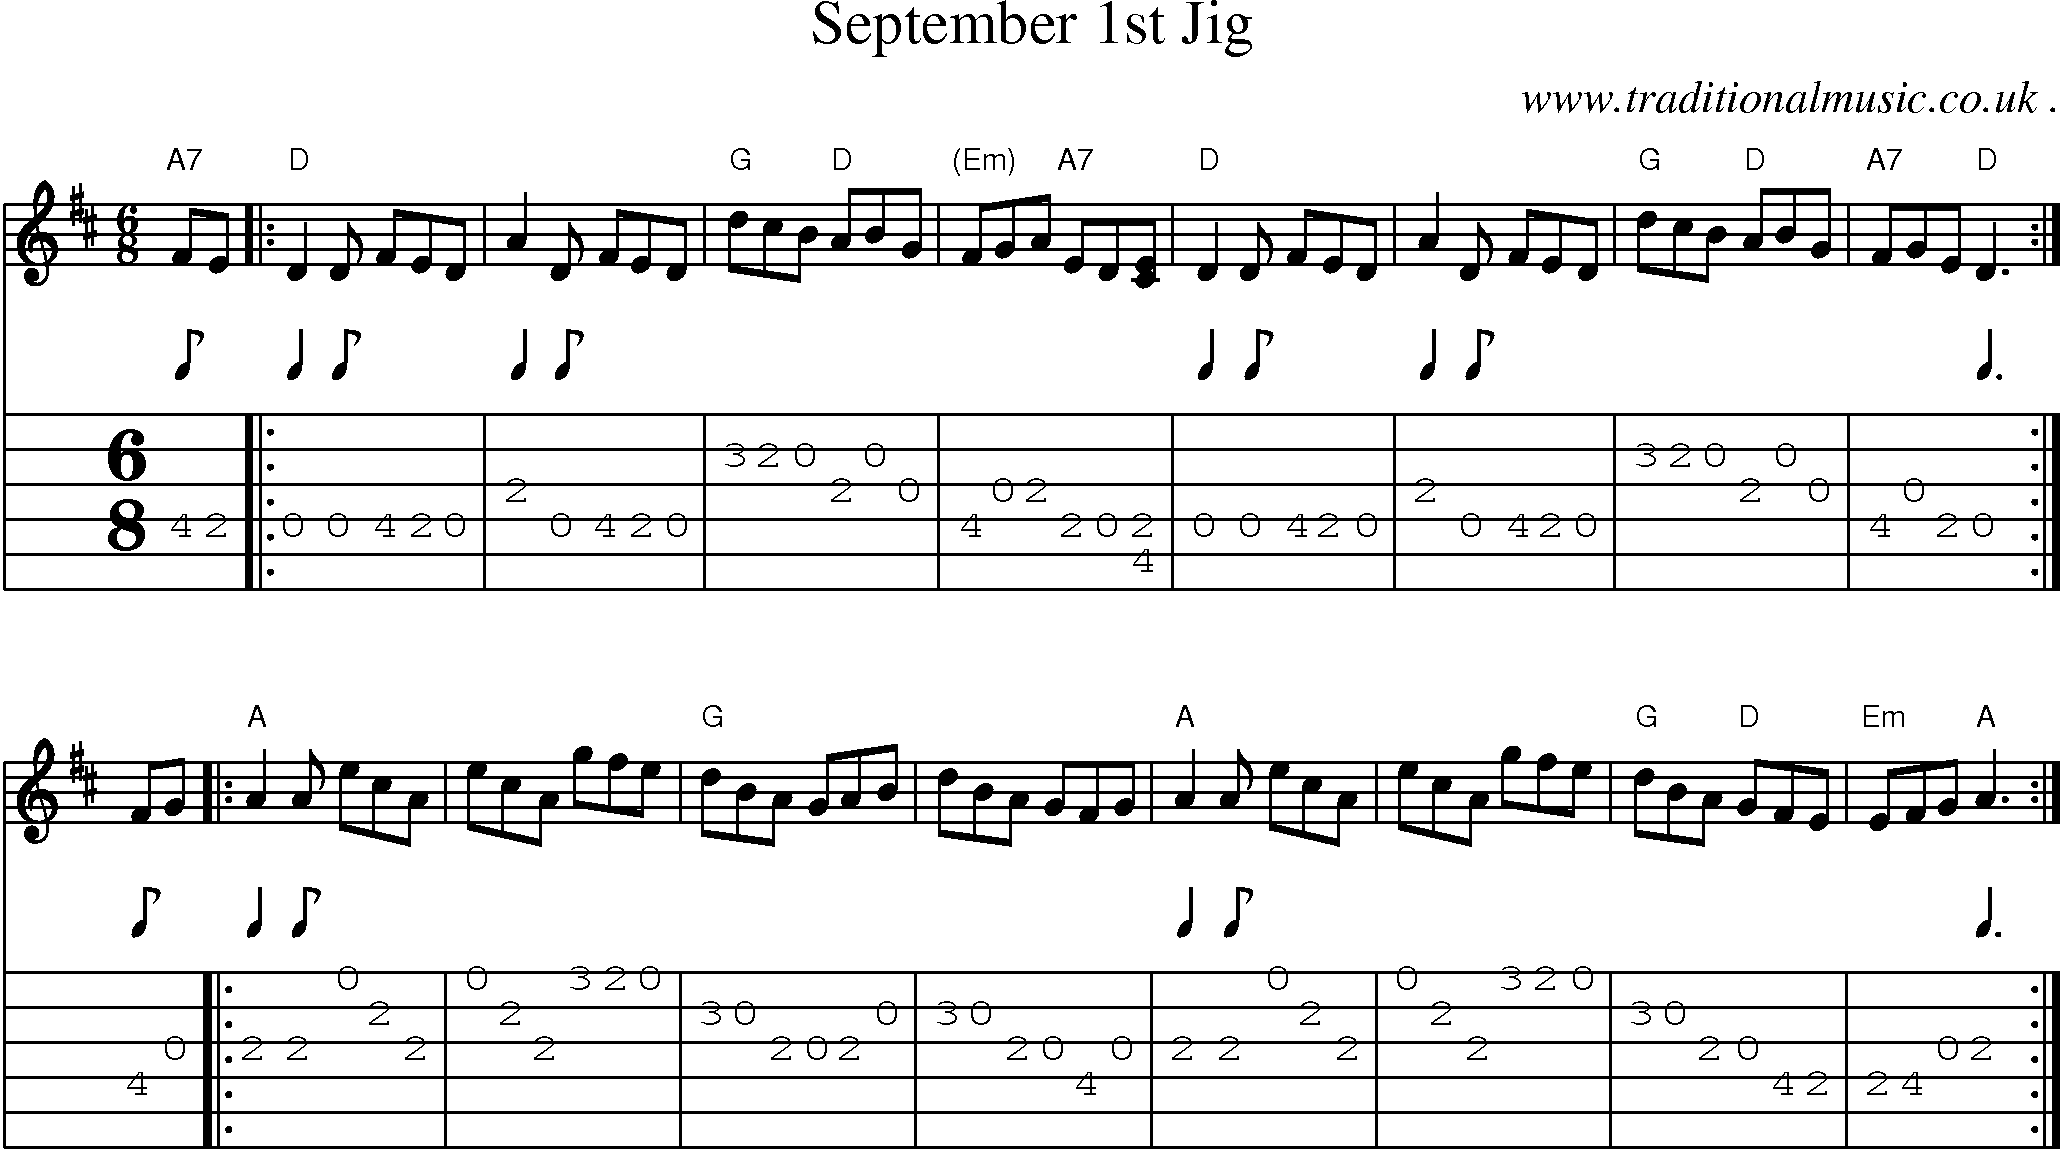 Sheet-music  score, Chords and Guitar Tabs for September 1st Jig